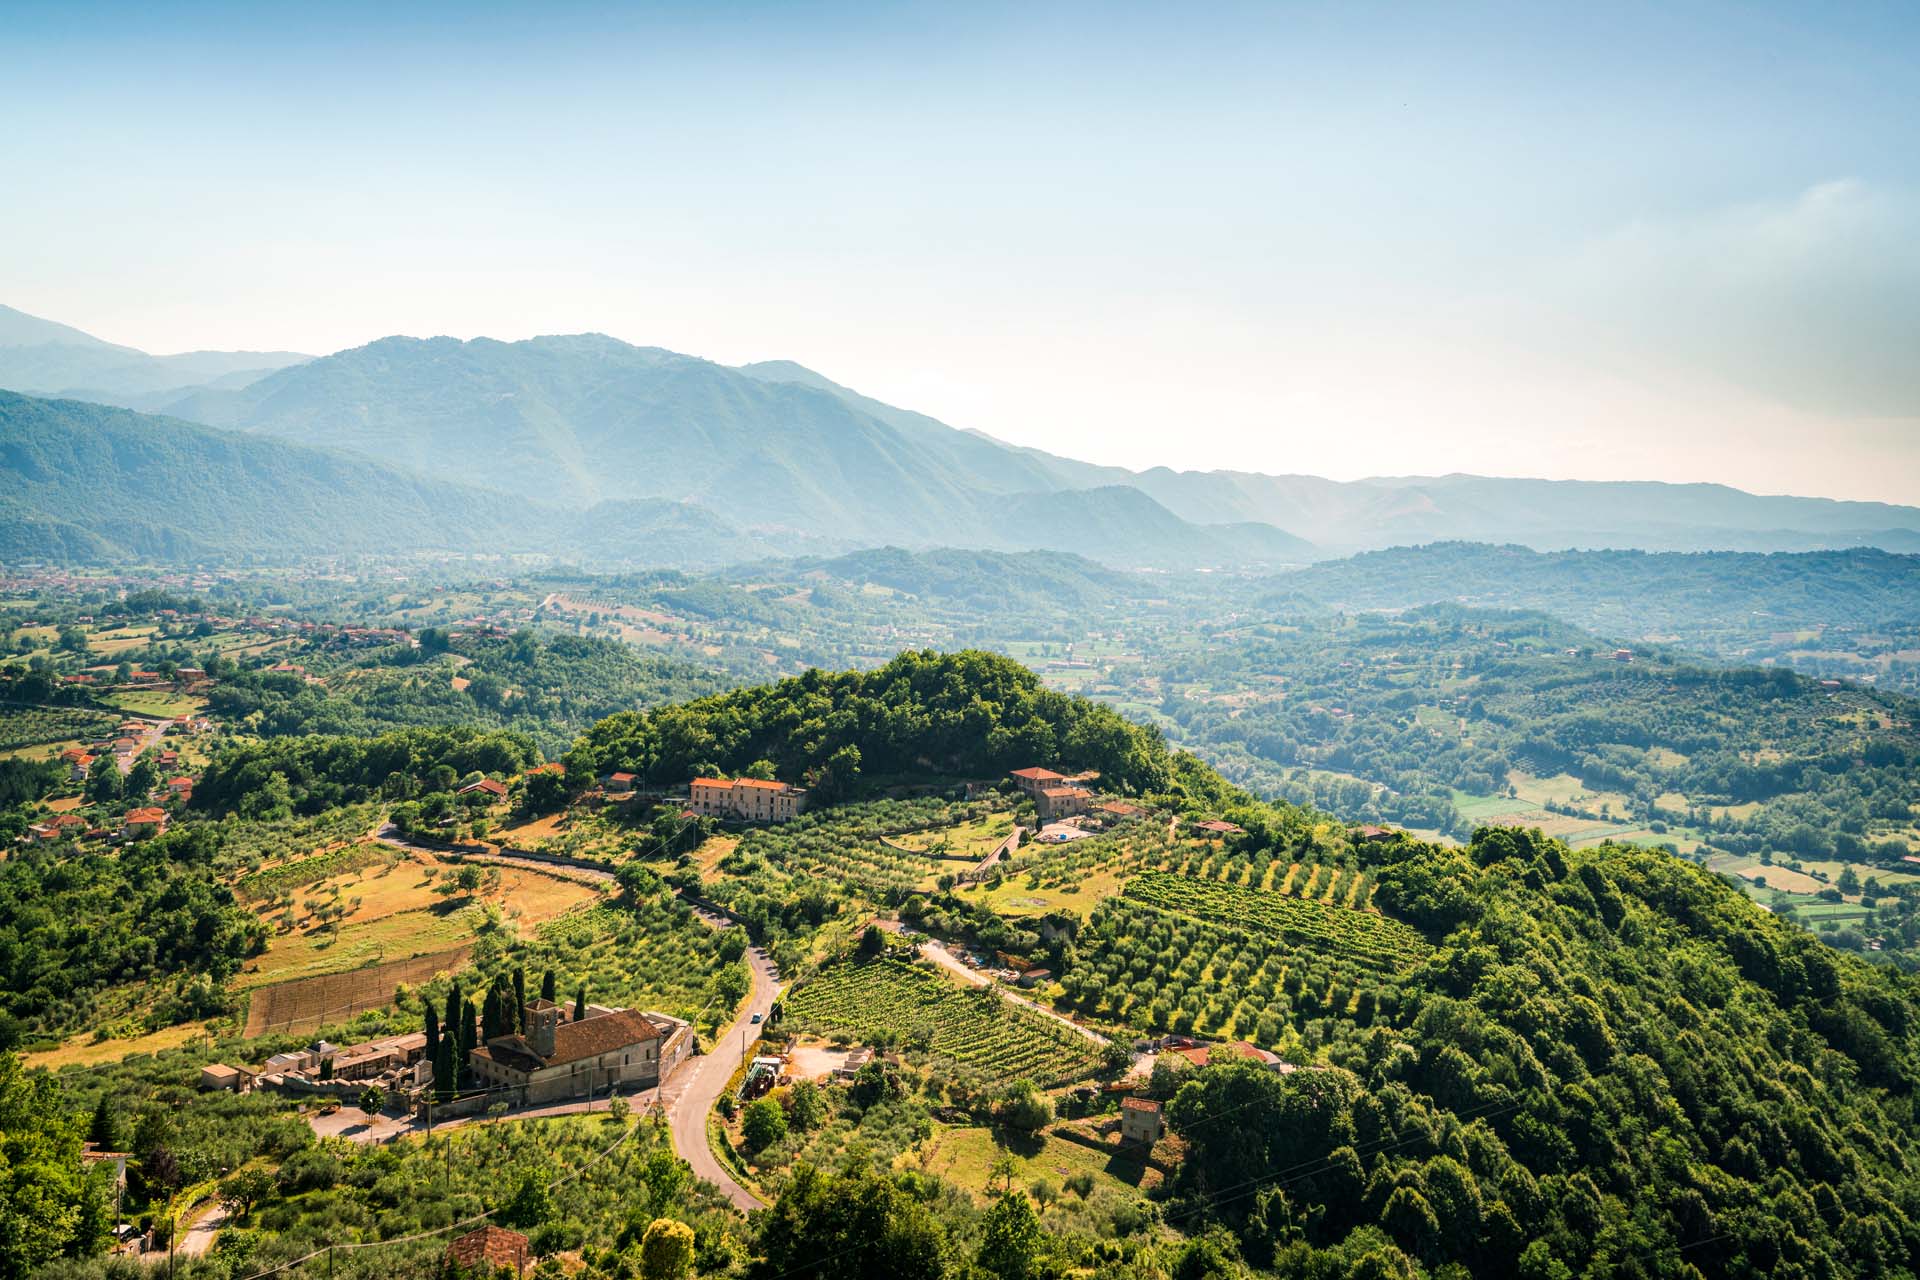 Abruzzo vineyards